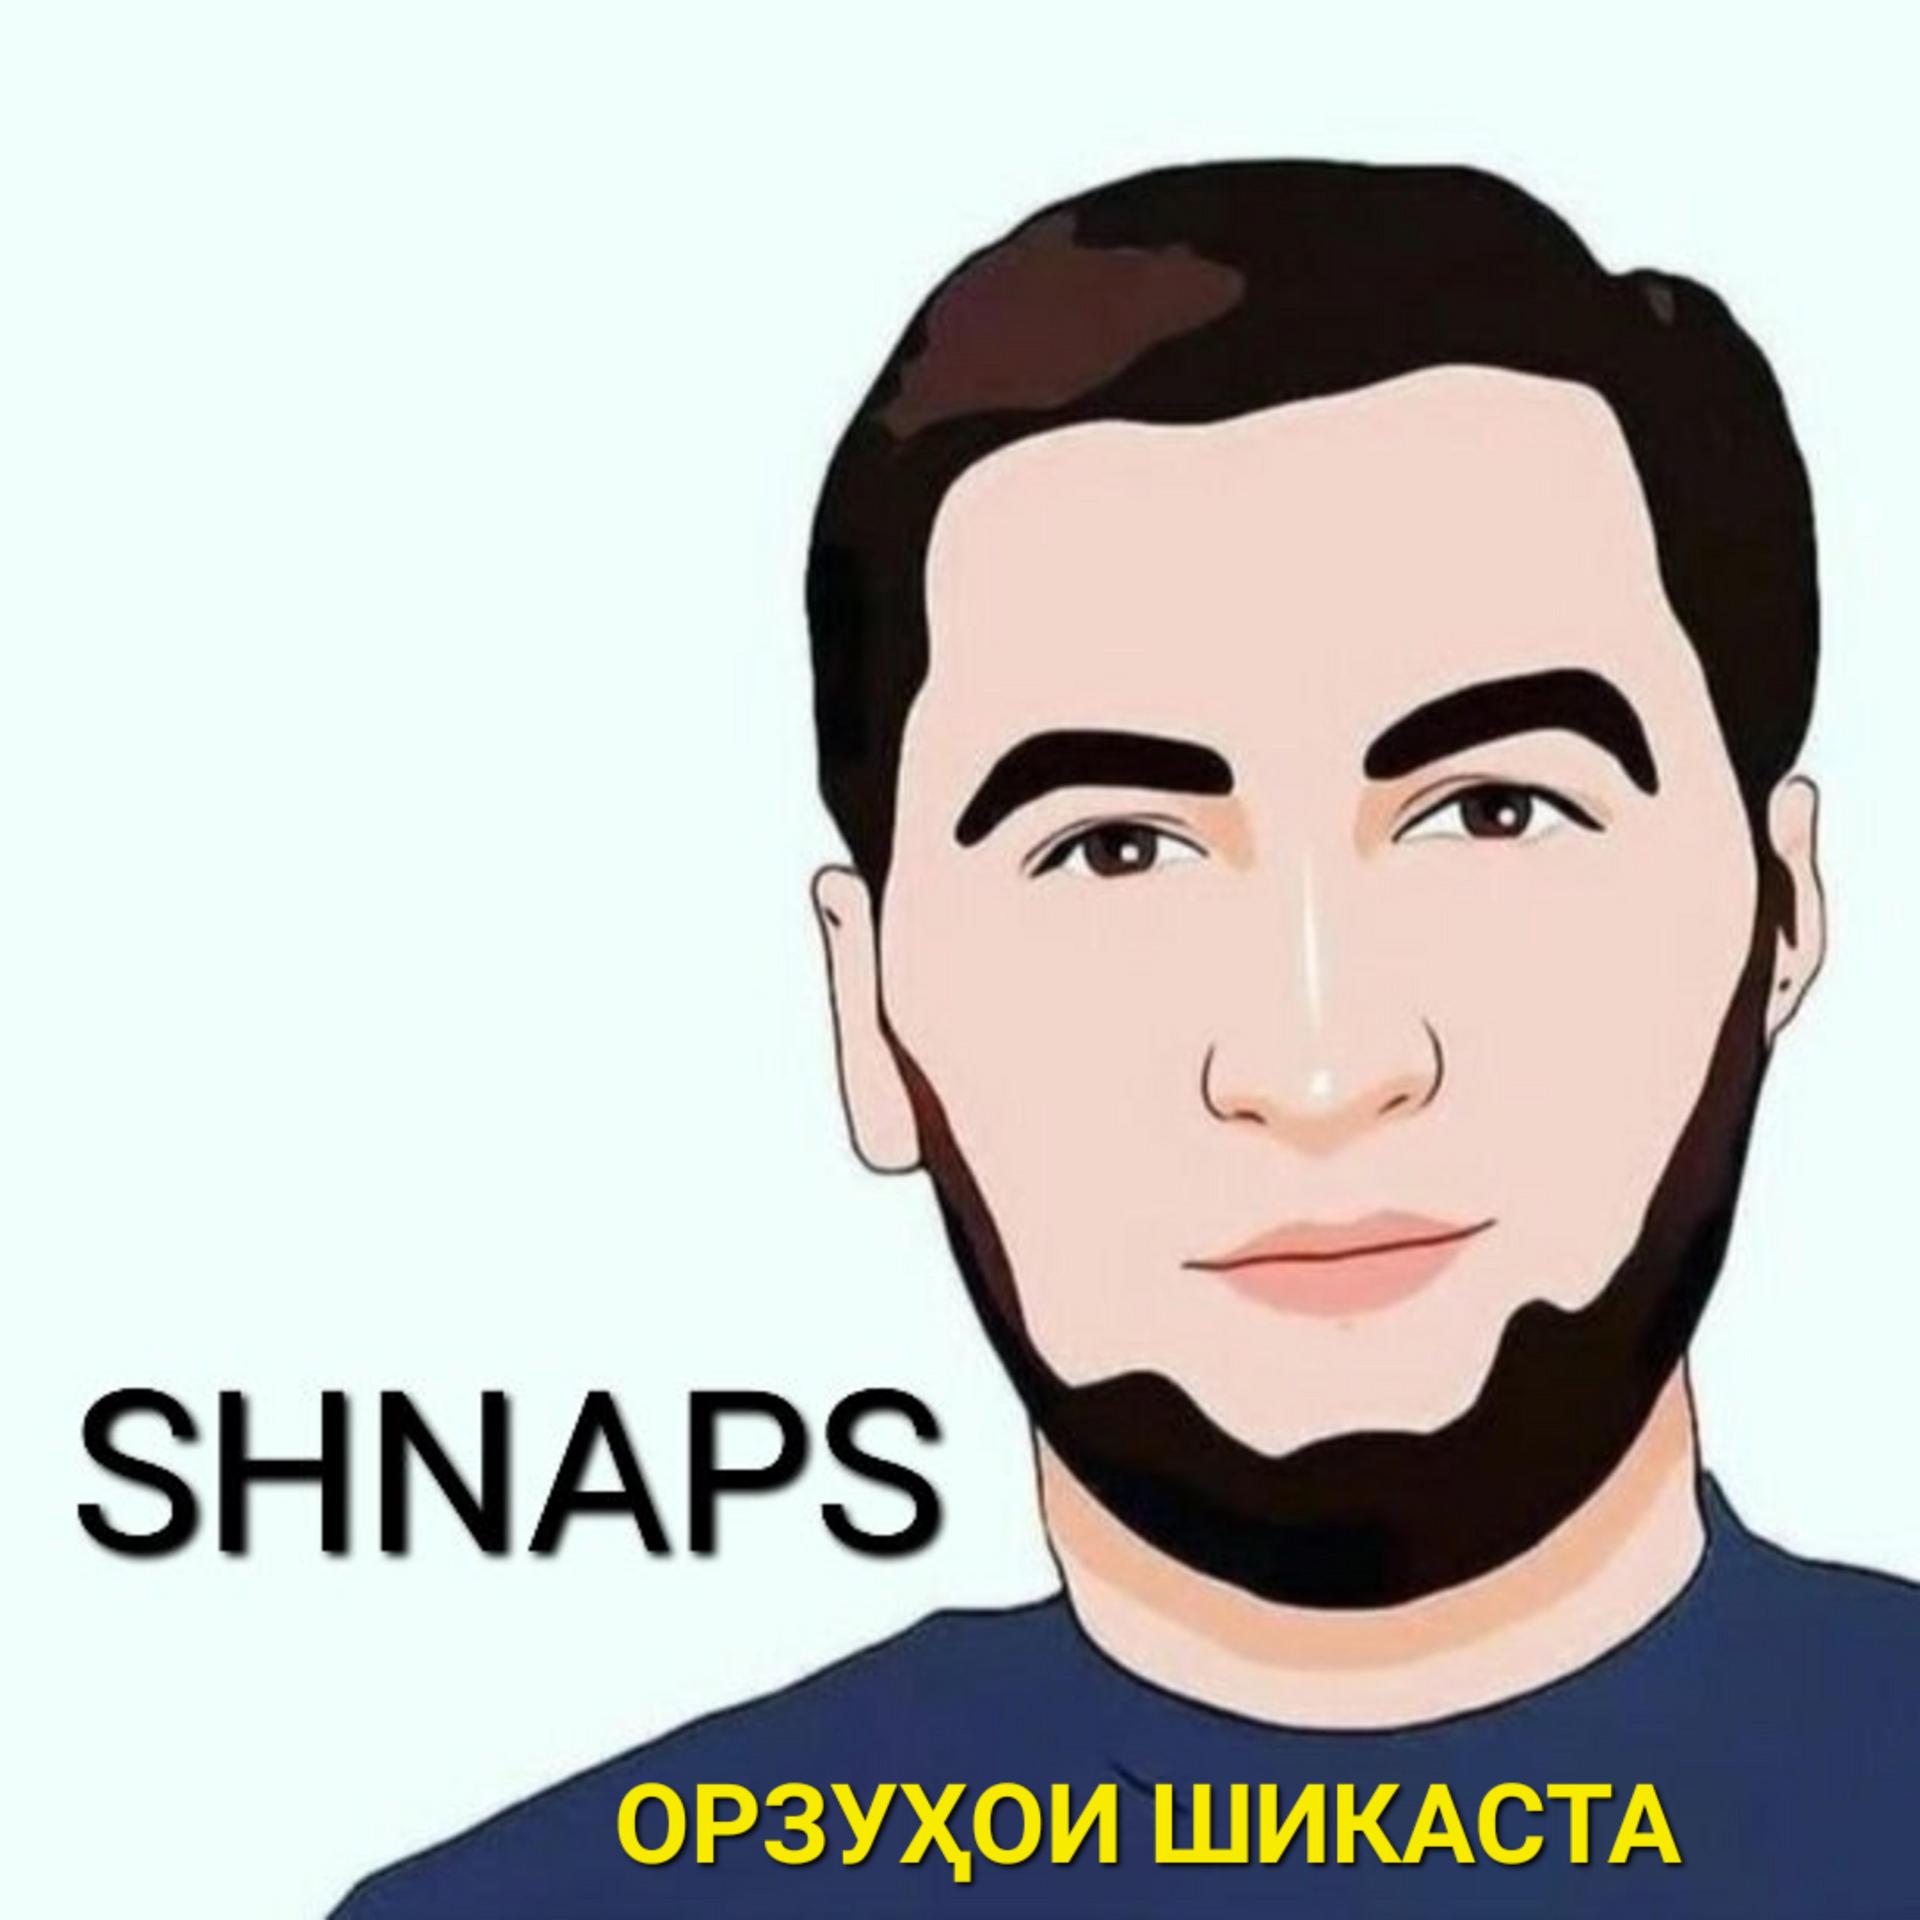 Shnaps - фото